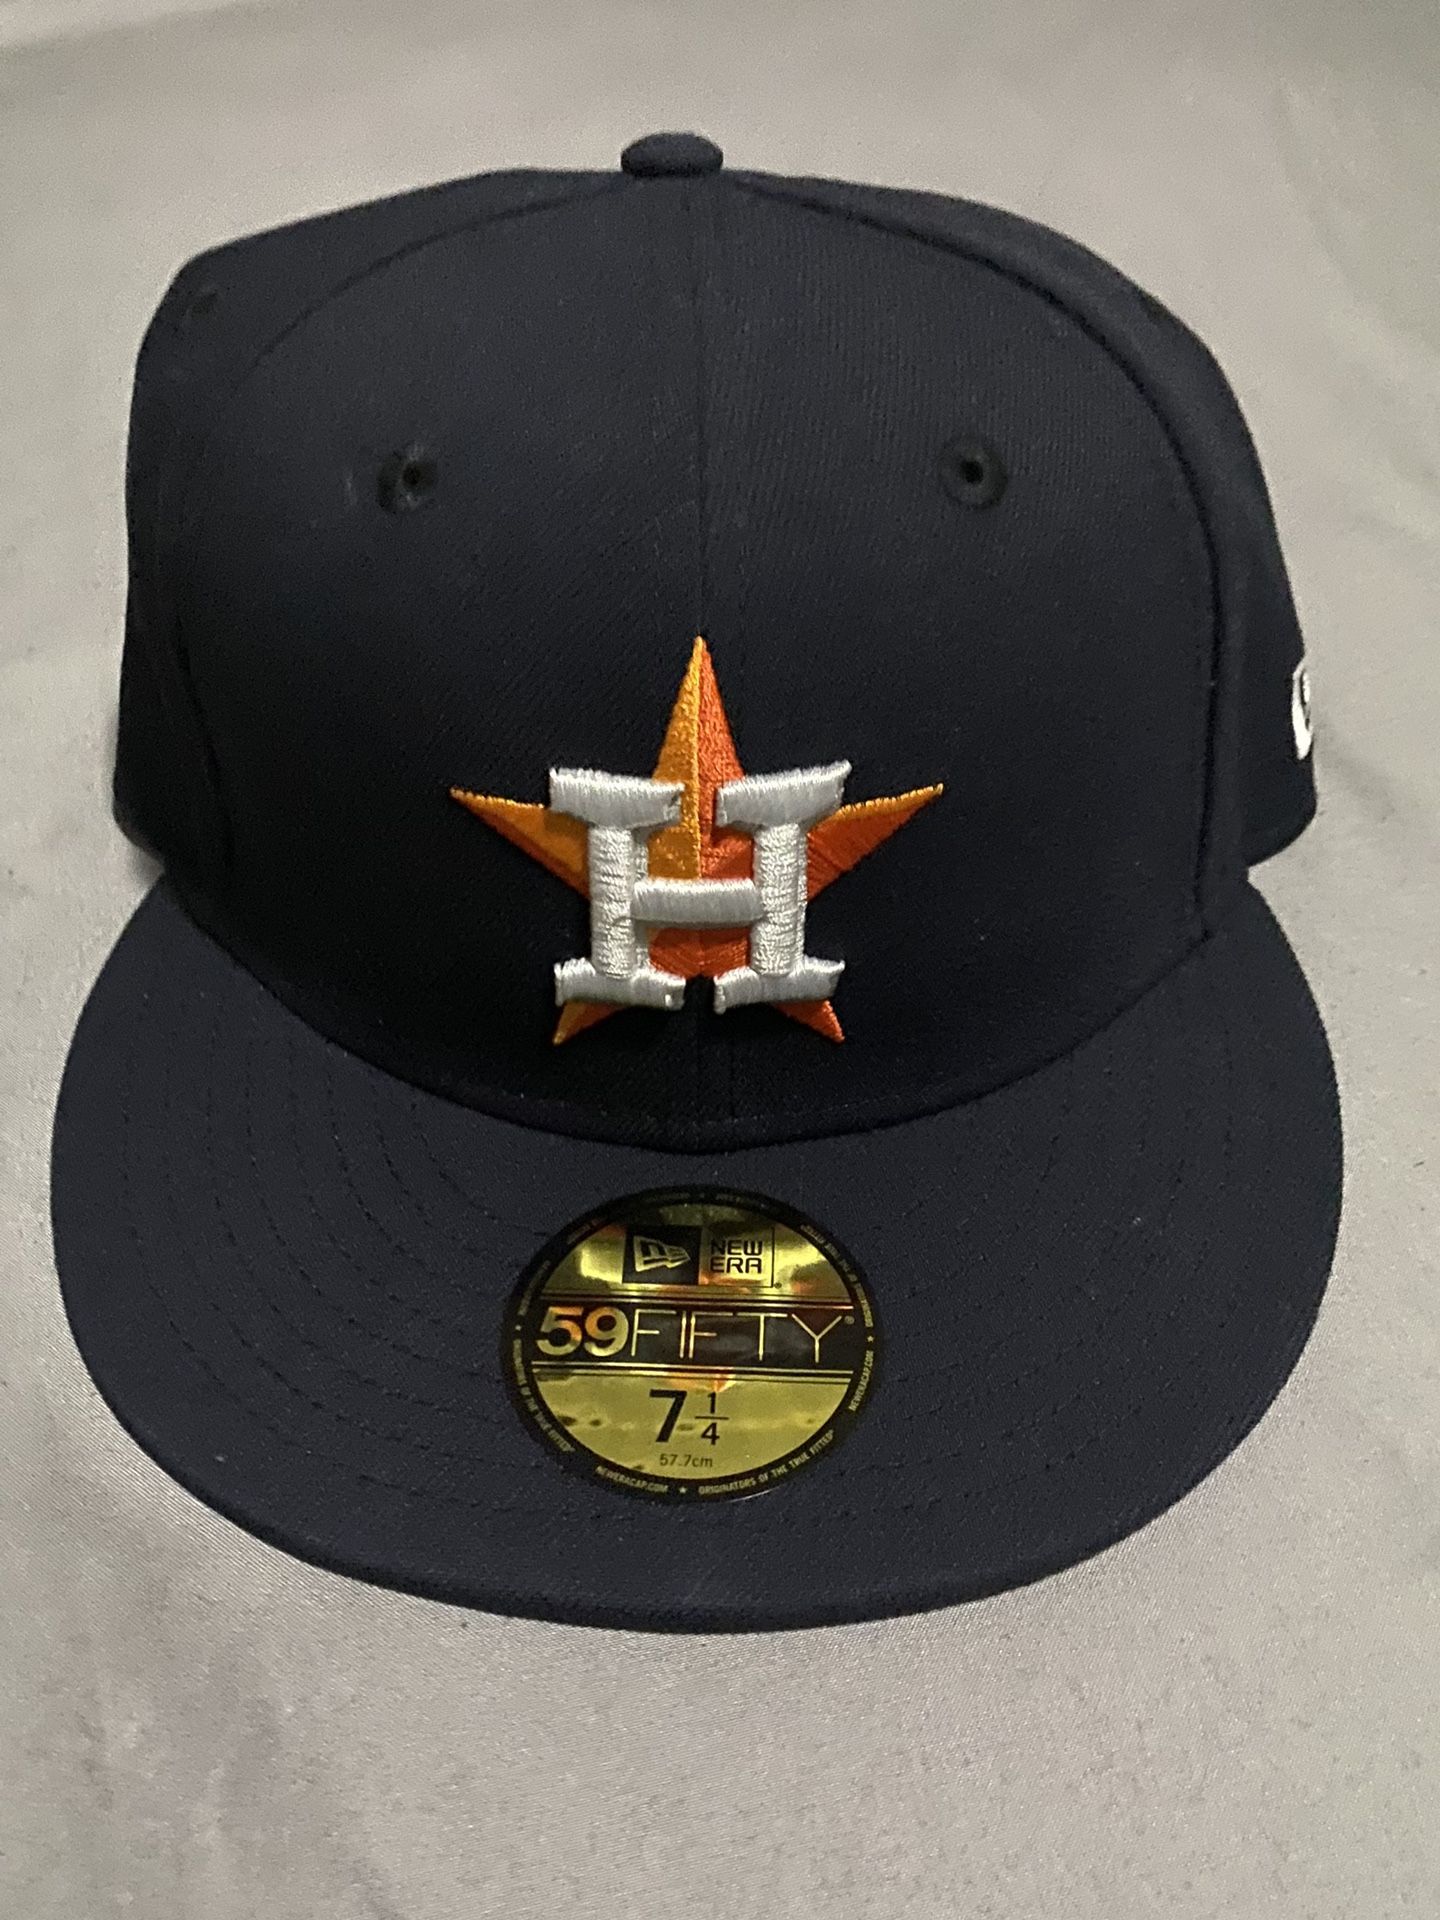 New Era 59fifty Houston Astros Navy Blue Hat